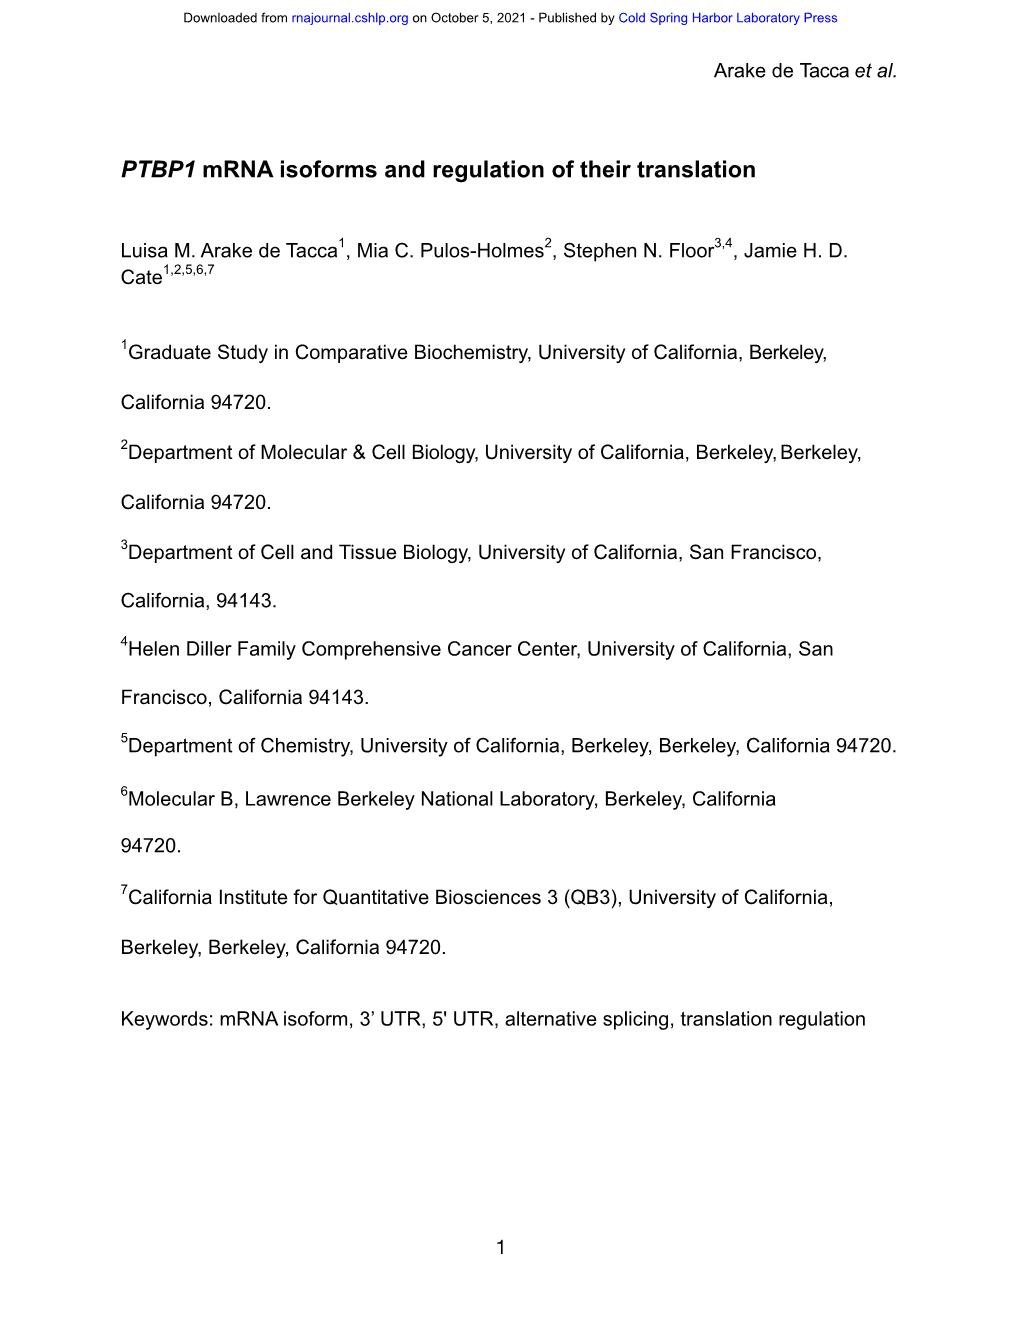 PTBP1 Mrna Isoforms and Regulation of Their Translation